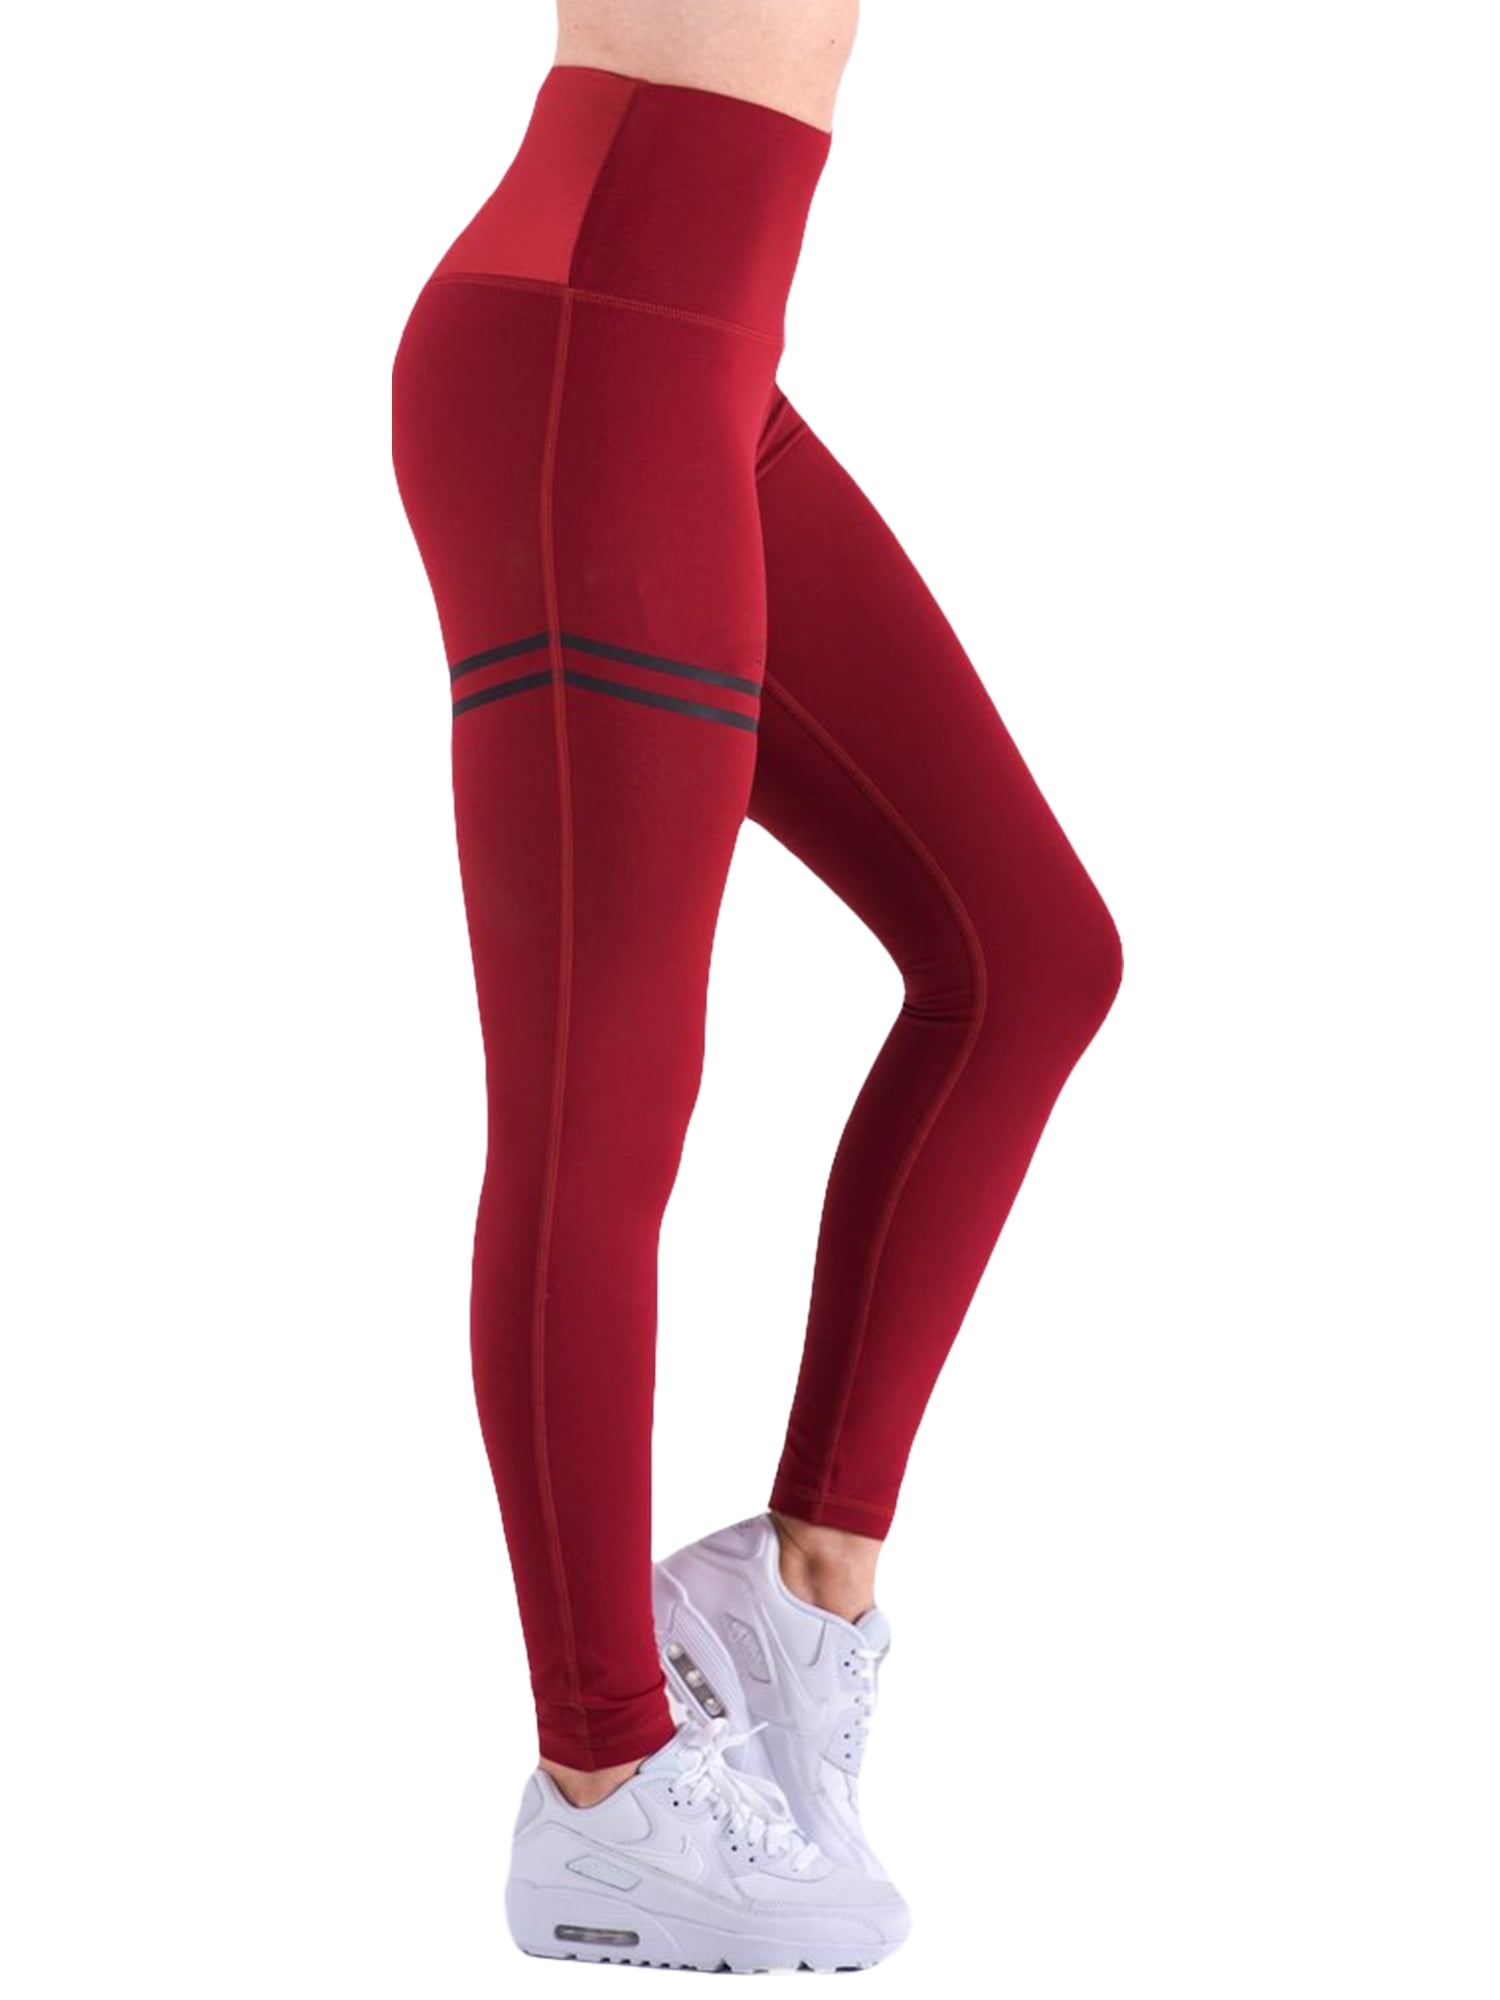 Womens Gym Fitness Seamless Yoga Leggings High Workout Ladies Sport Pants